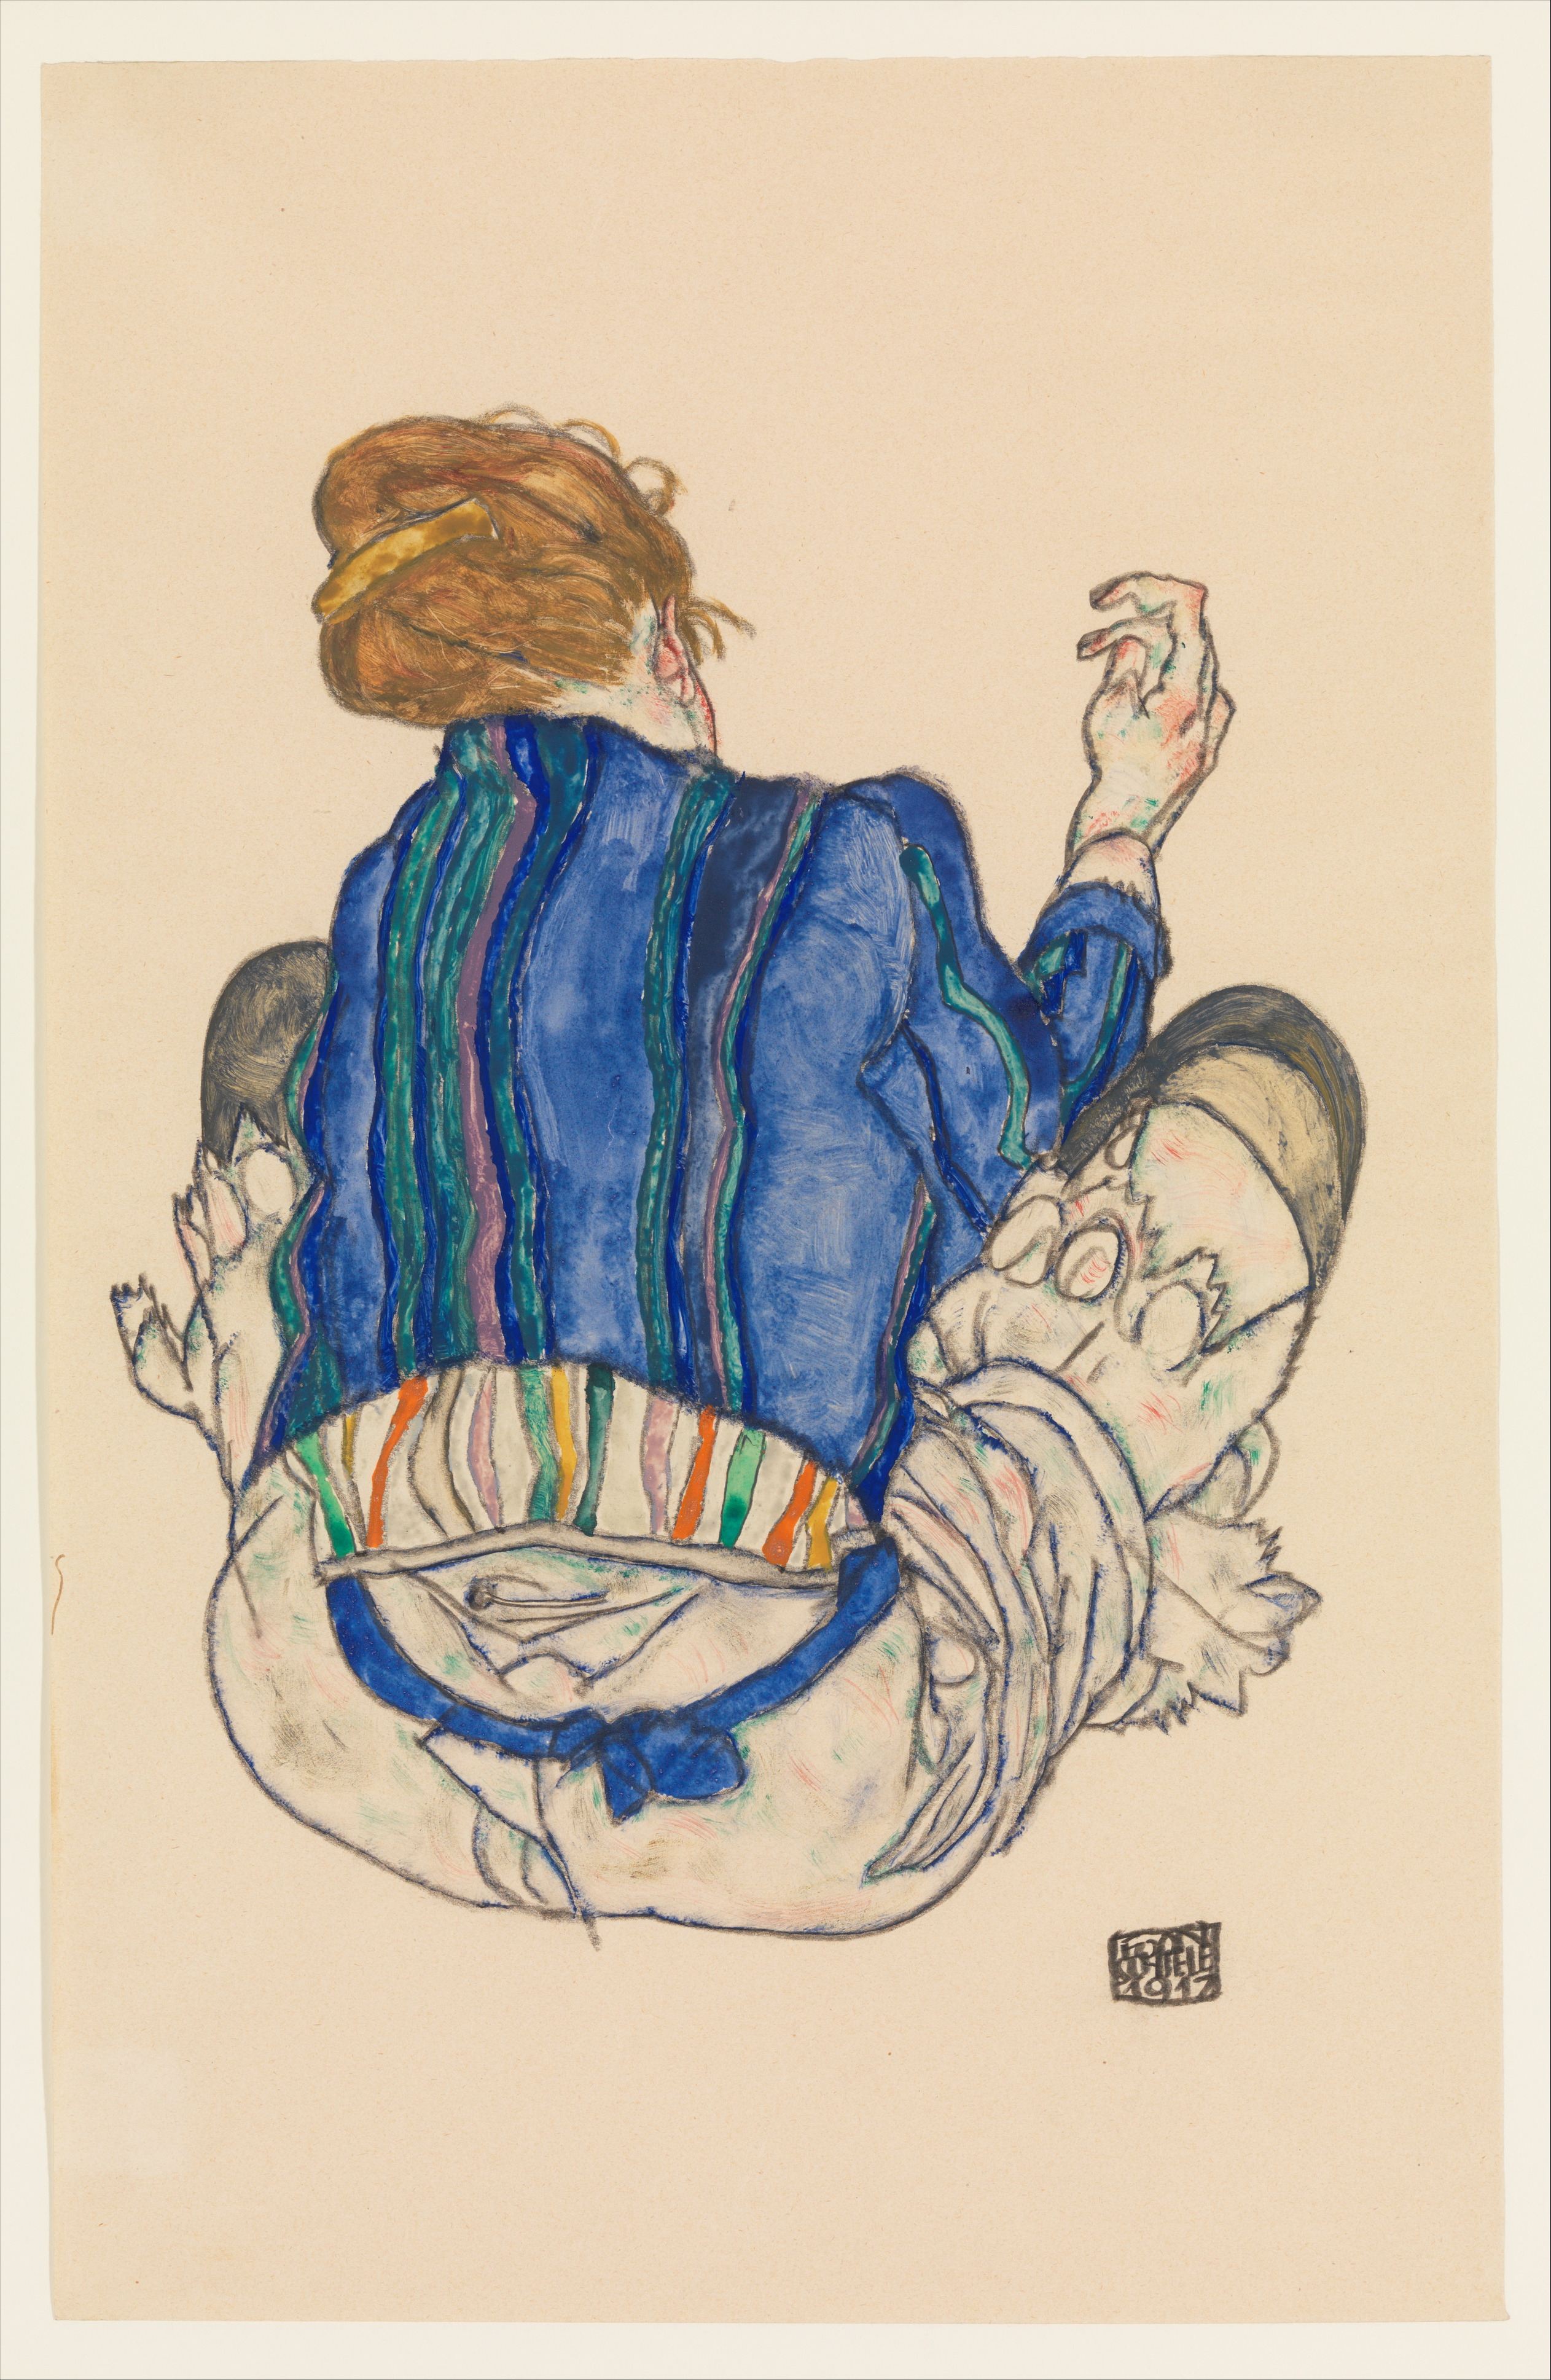 Sitzende Frau, Rückenansicht by Egon Schiele - 1917 - 46,4 x 29,8 cm Metropolitan Museum of Art